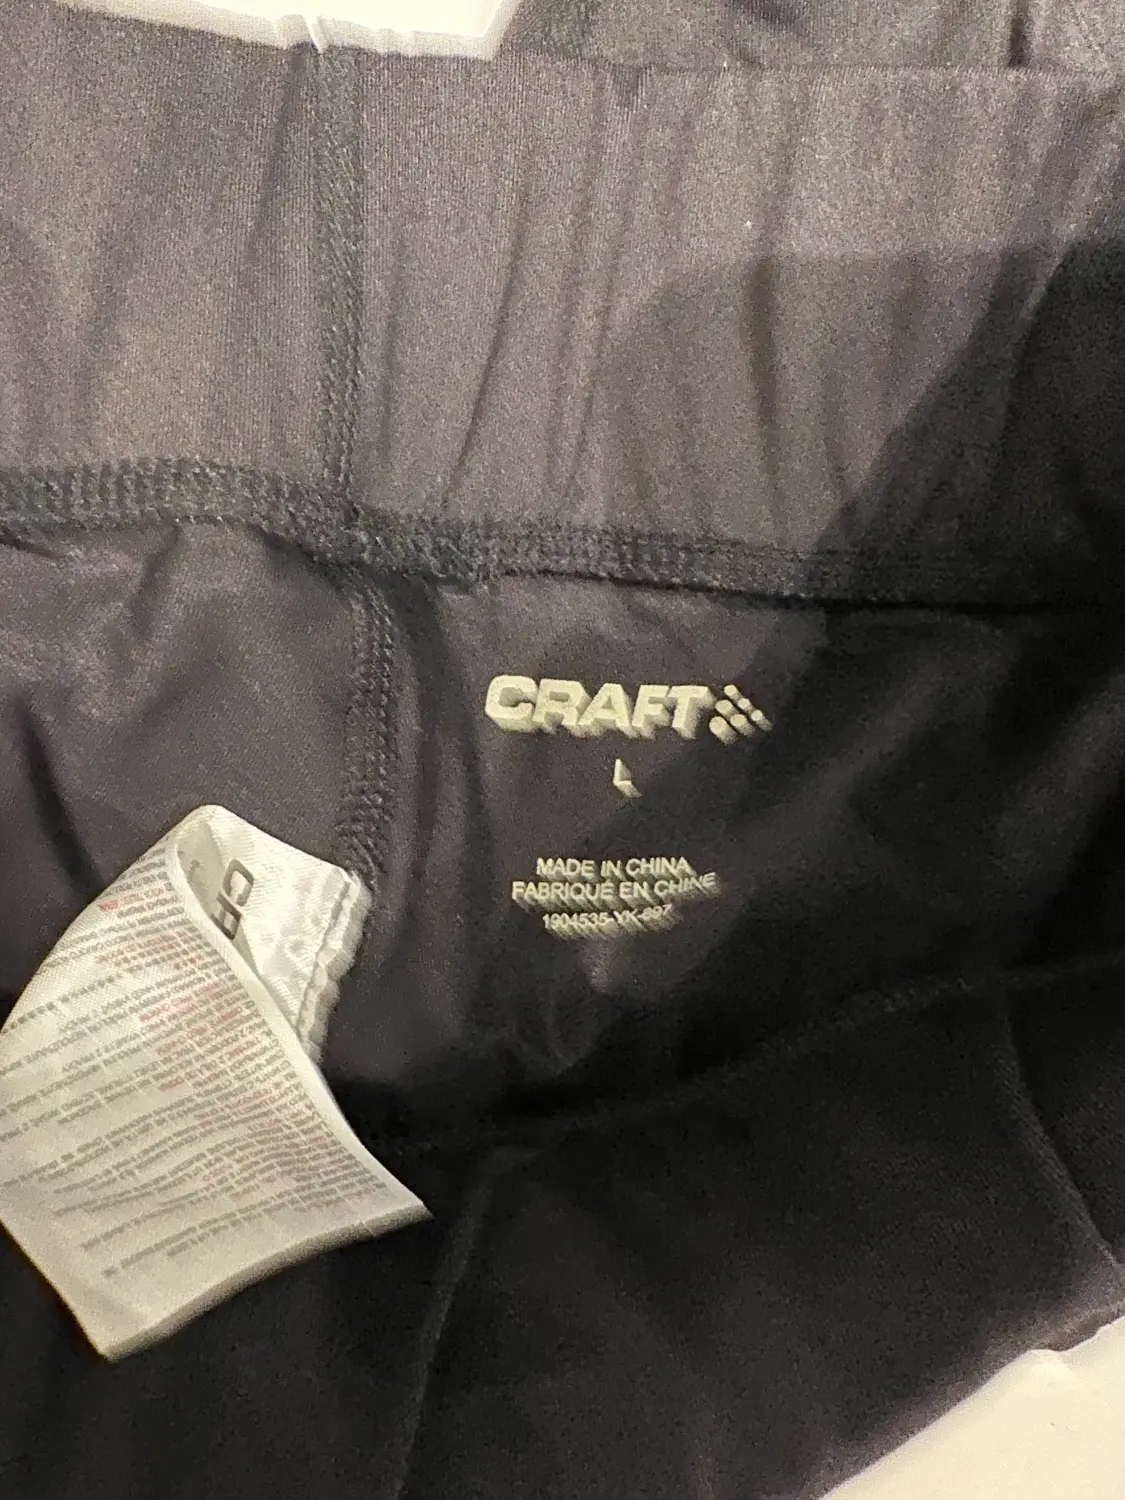 Craft bukser  tights